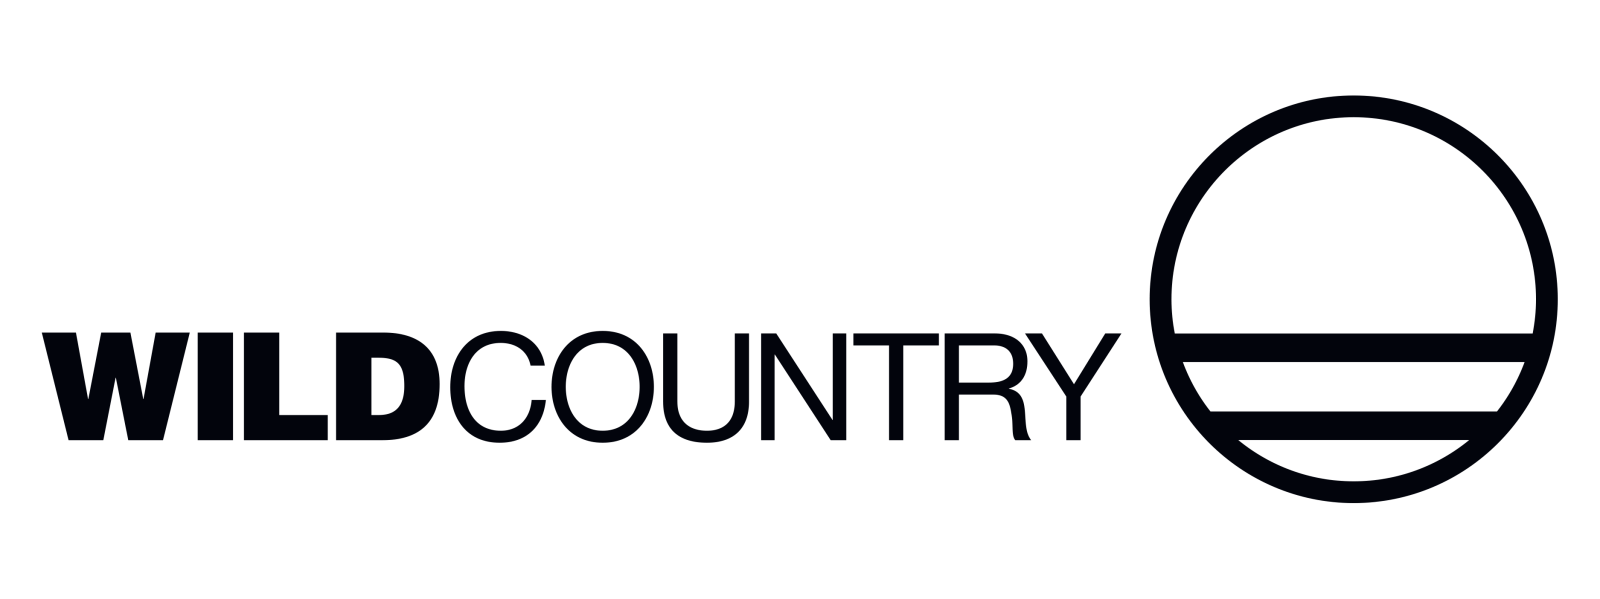 Wild Country Logo - Black